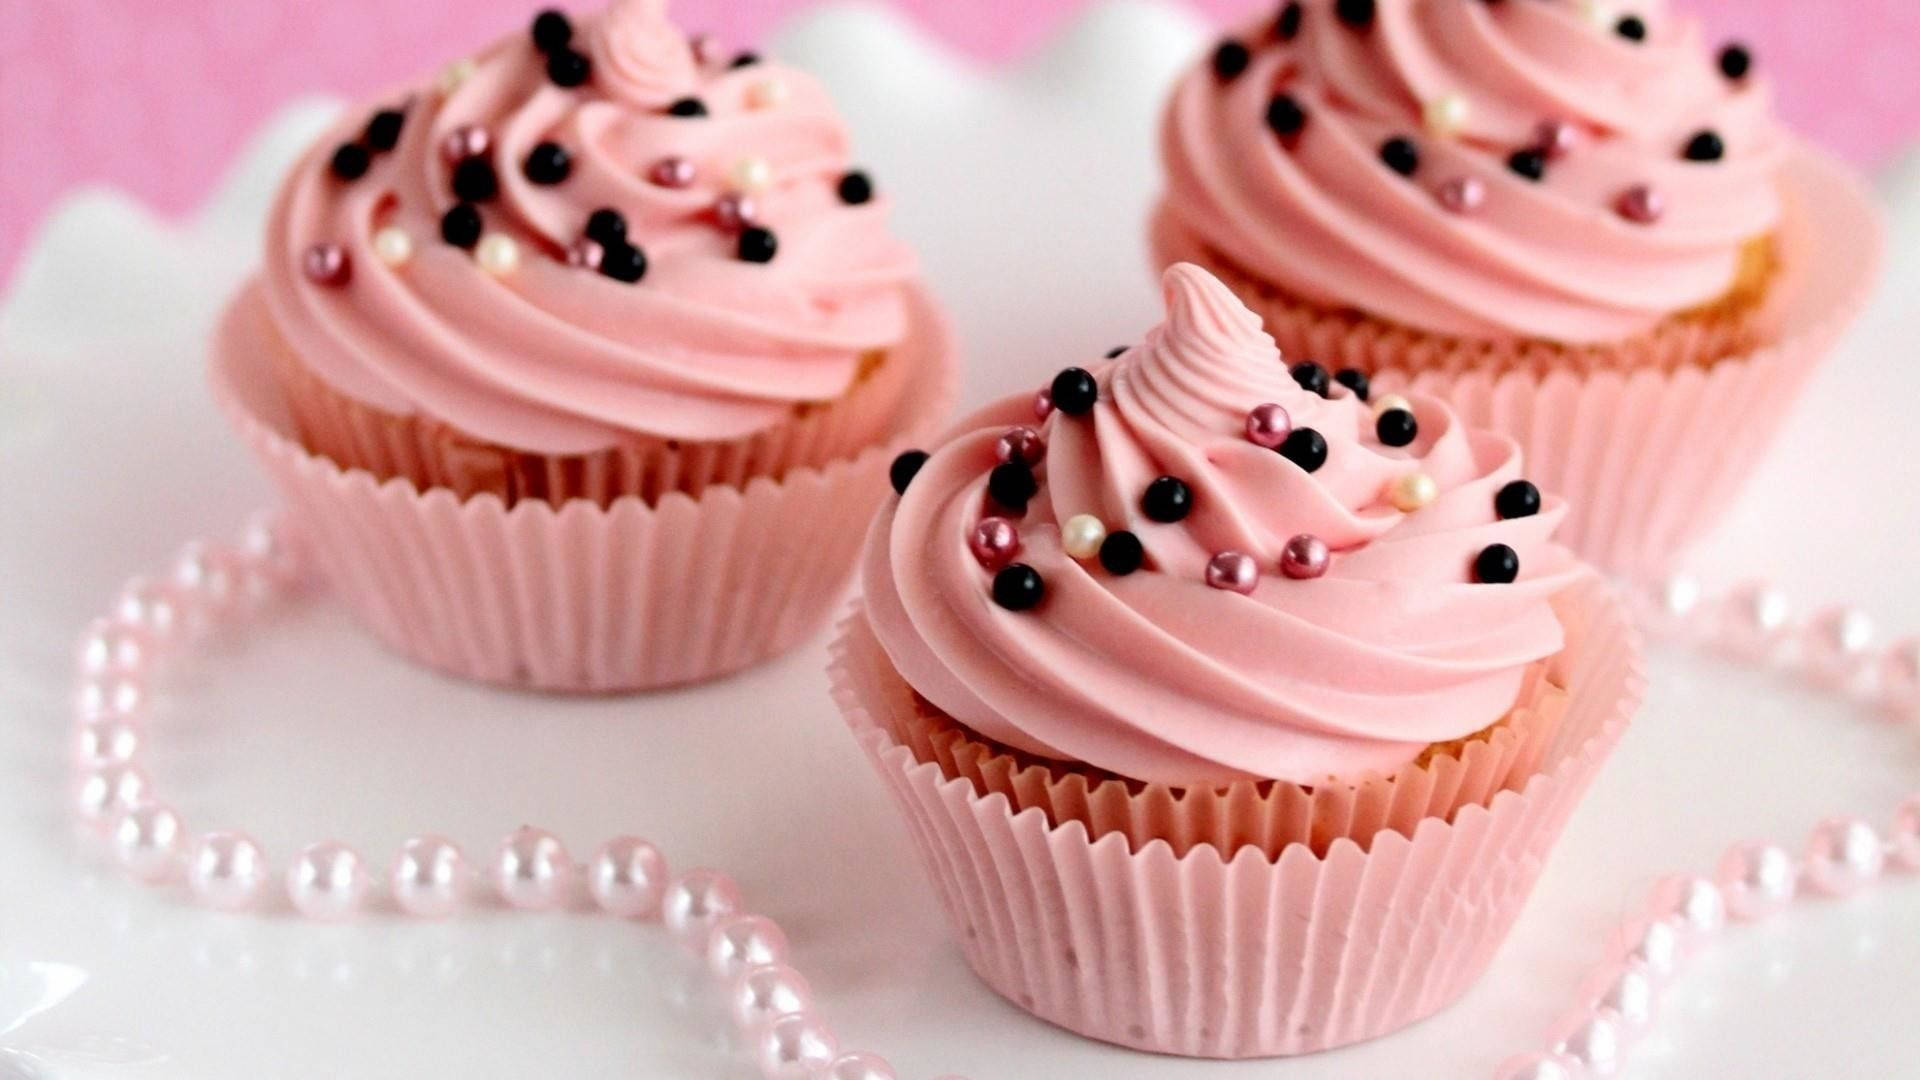 Indulgent Pink Cupcake with Sprinkles Wallpaper